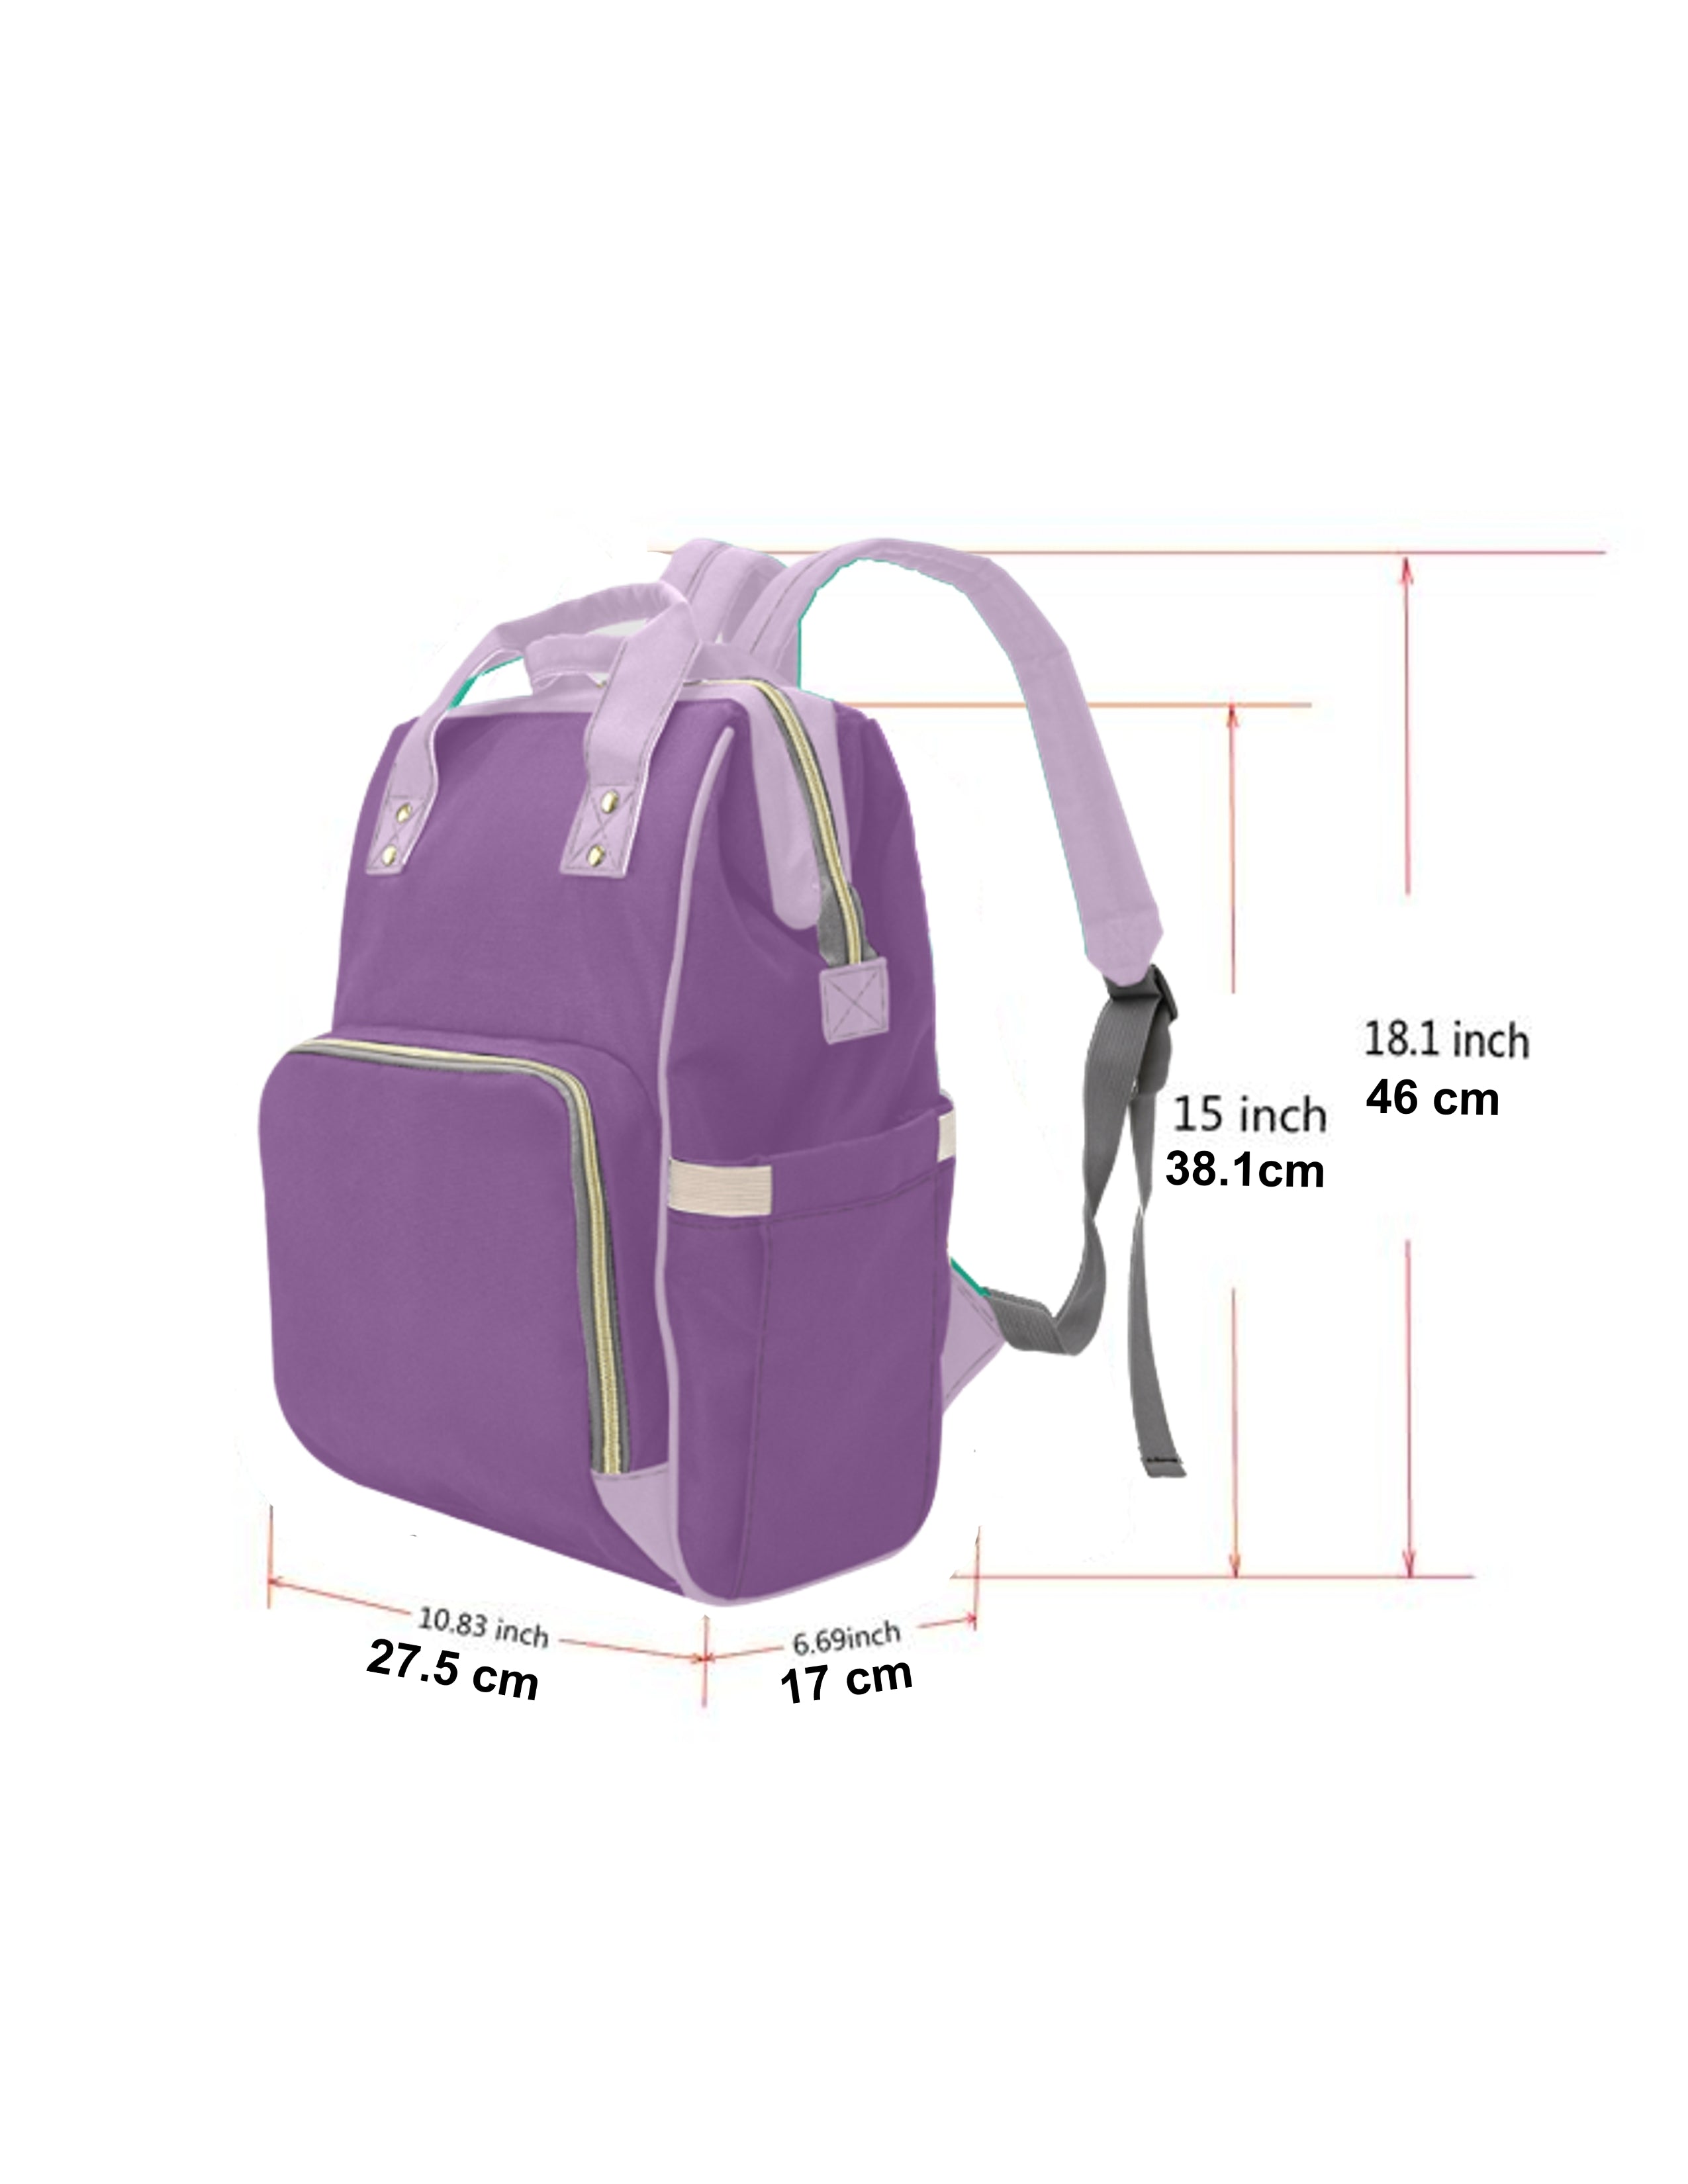 Monstera - Multi-Function Backpack Nappy Bag